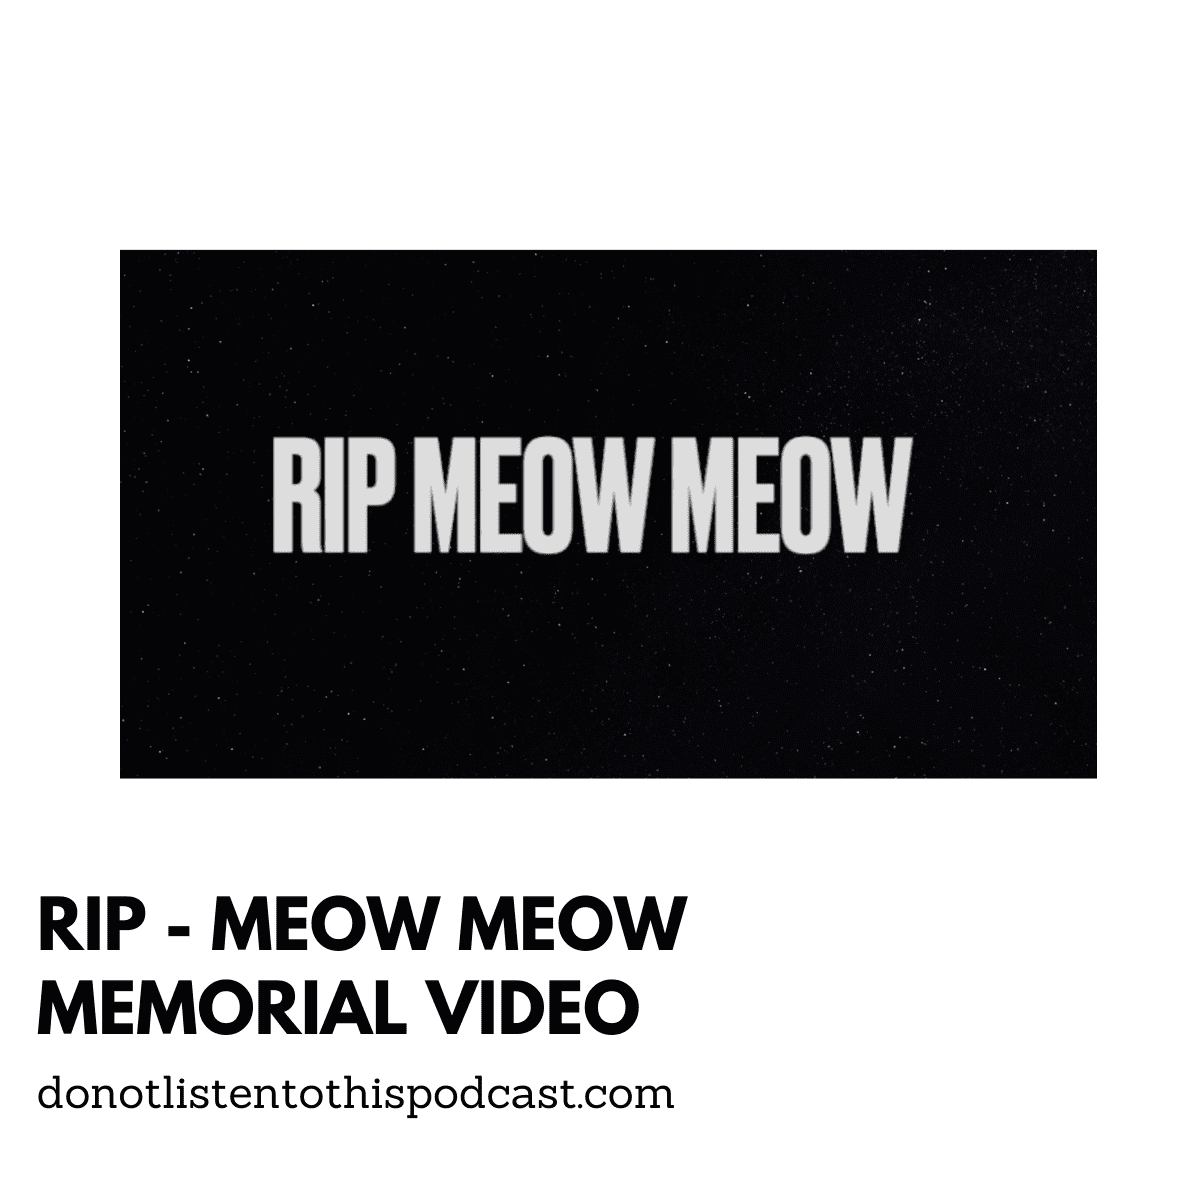 RIP Meow Meow Video post thumbnail image